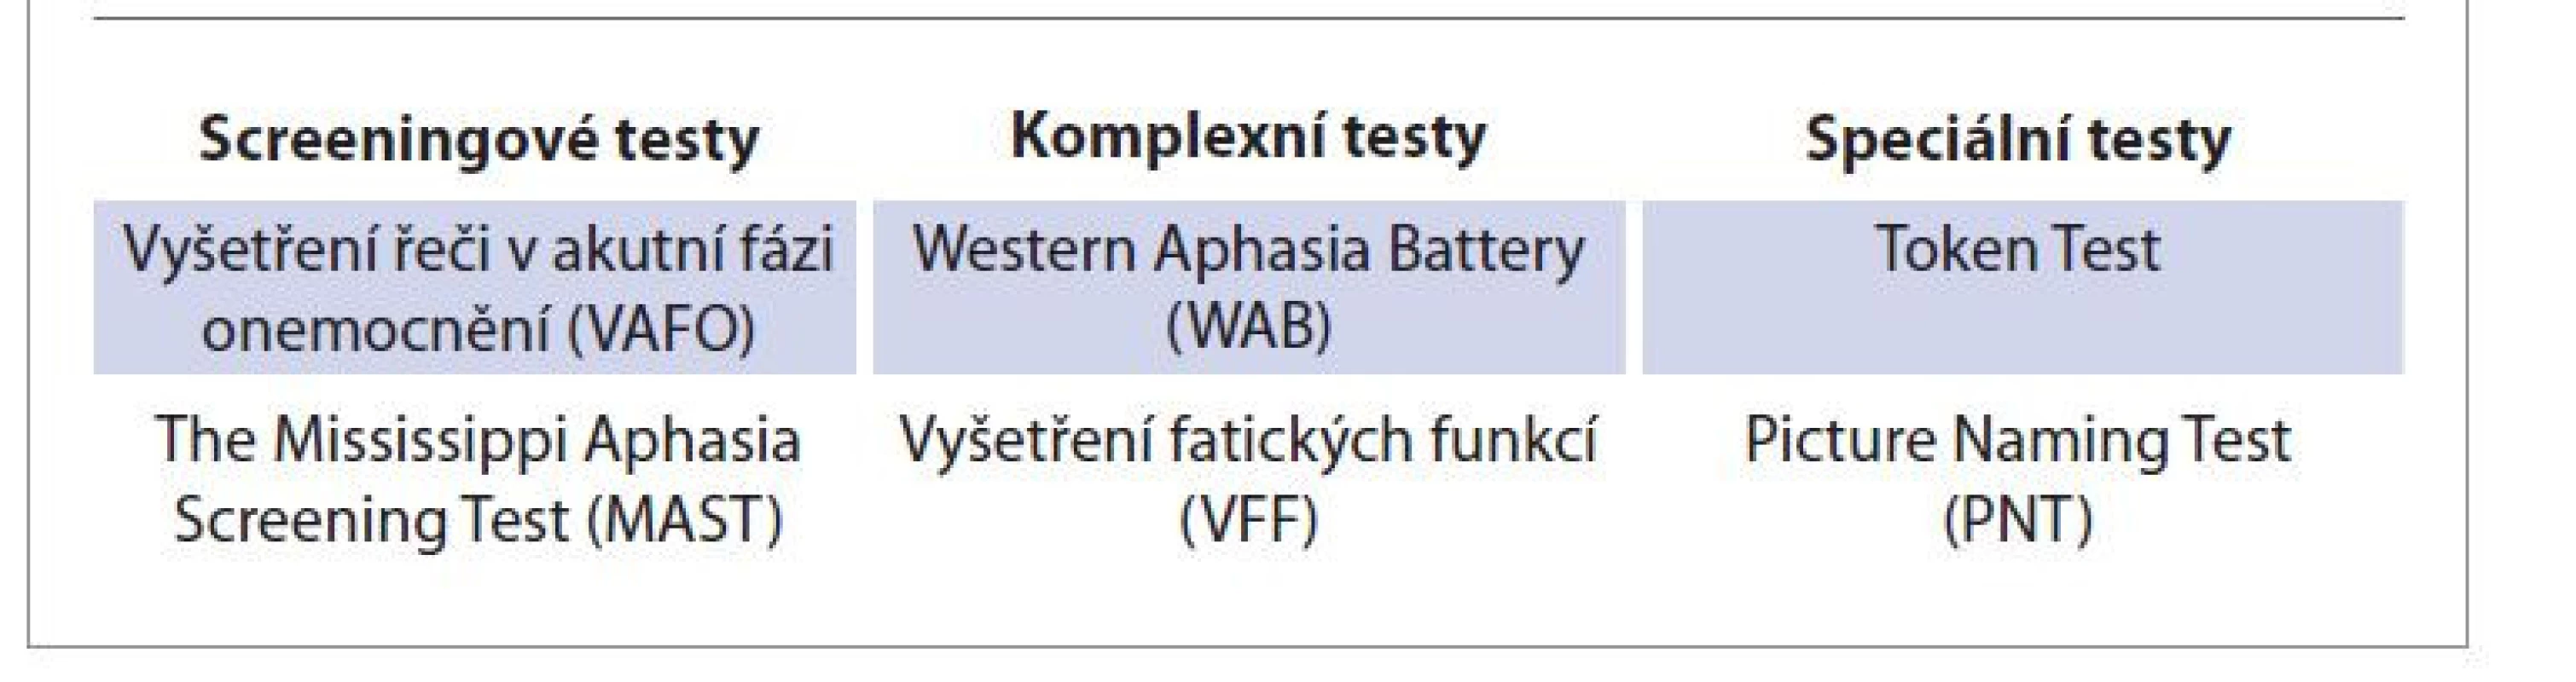 Využívané testy fatických funkcí.<br>
Tab. 1. Commonly used tests of phatic functions.